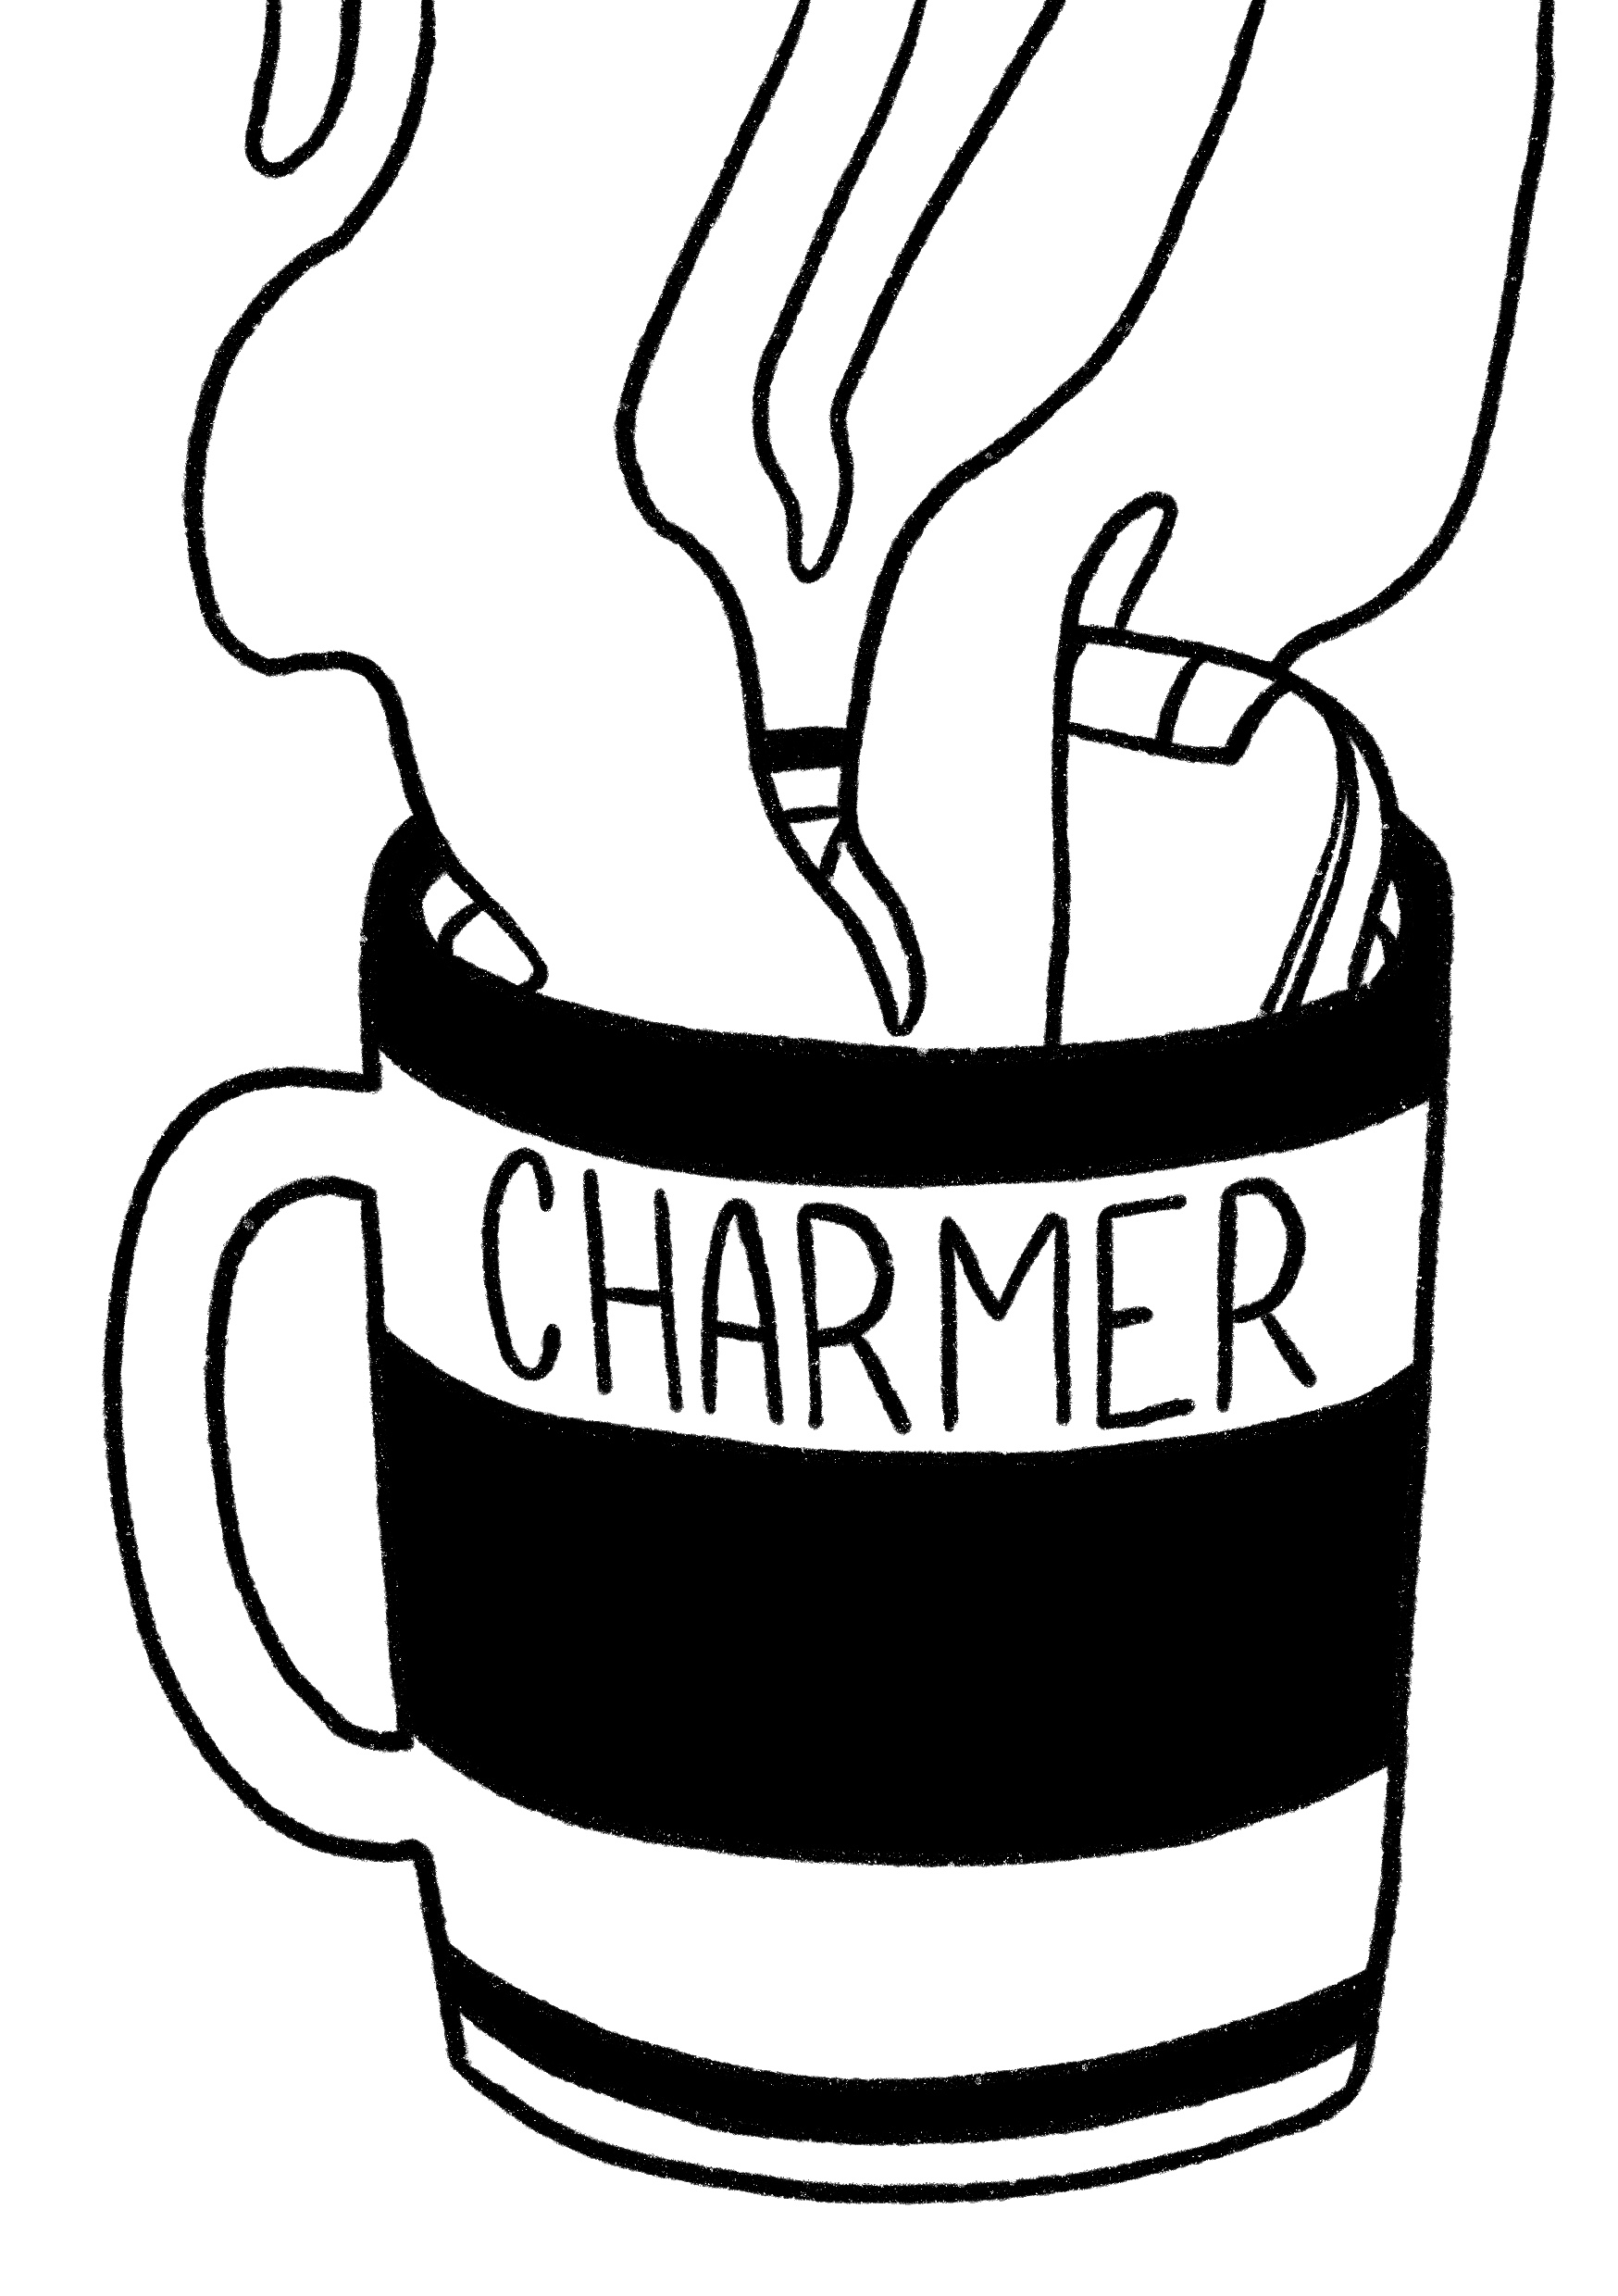 Charmer